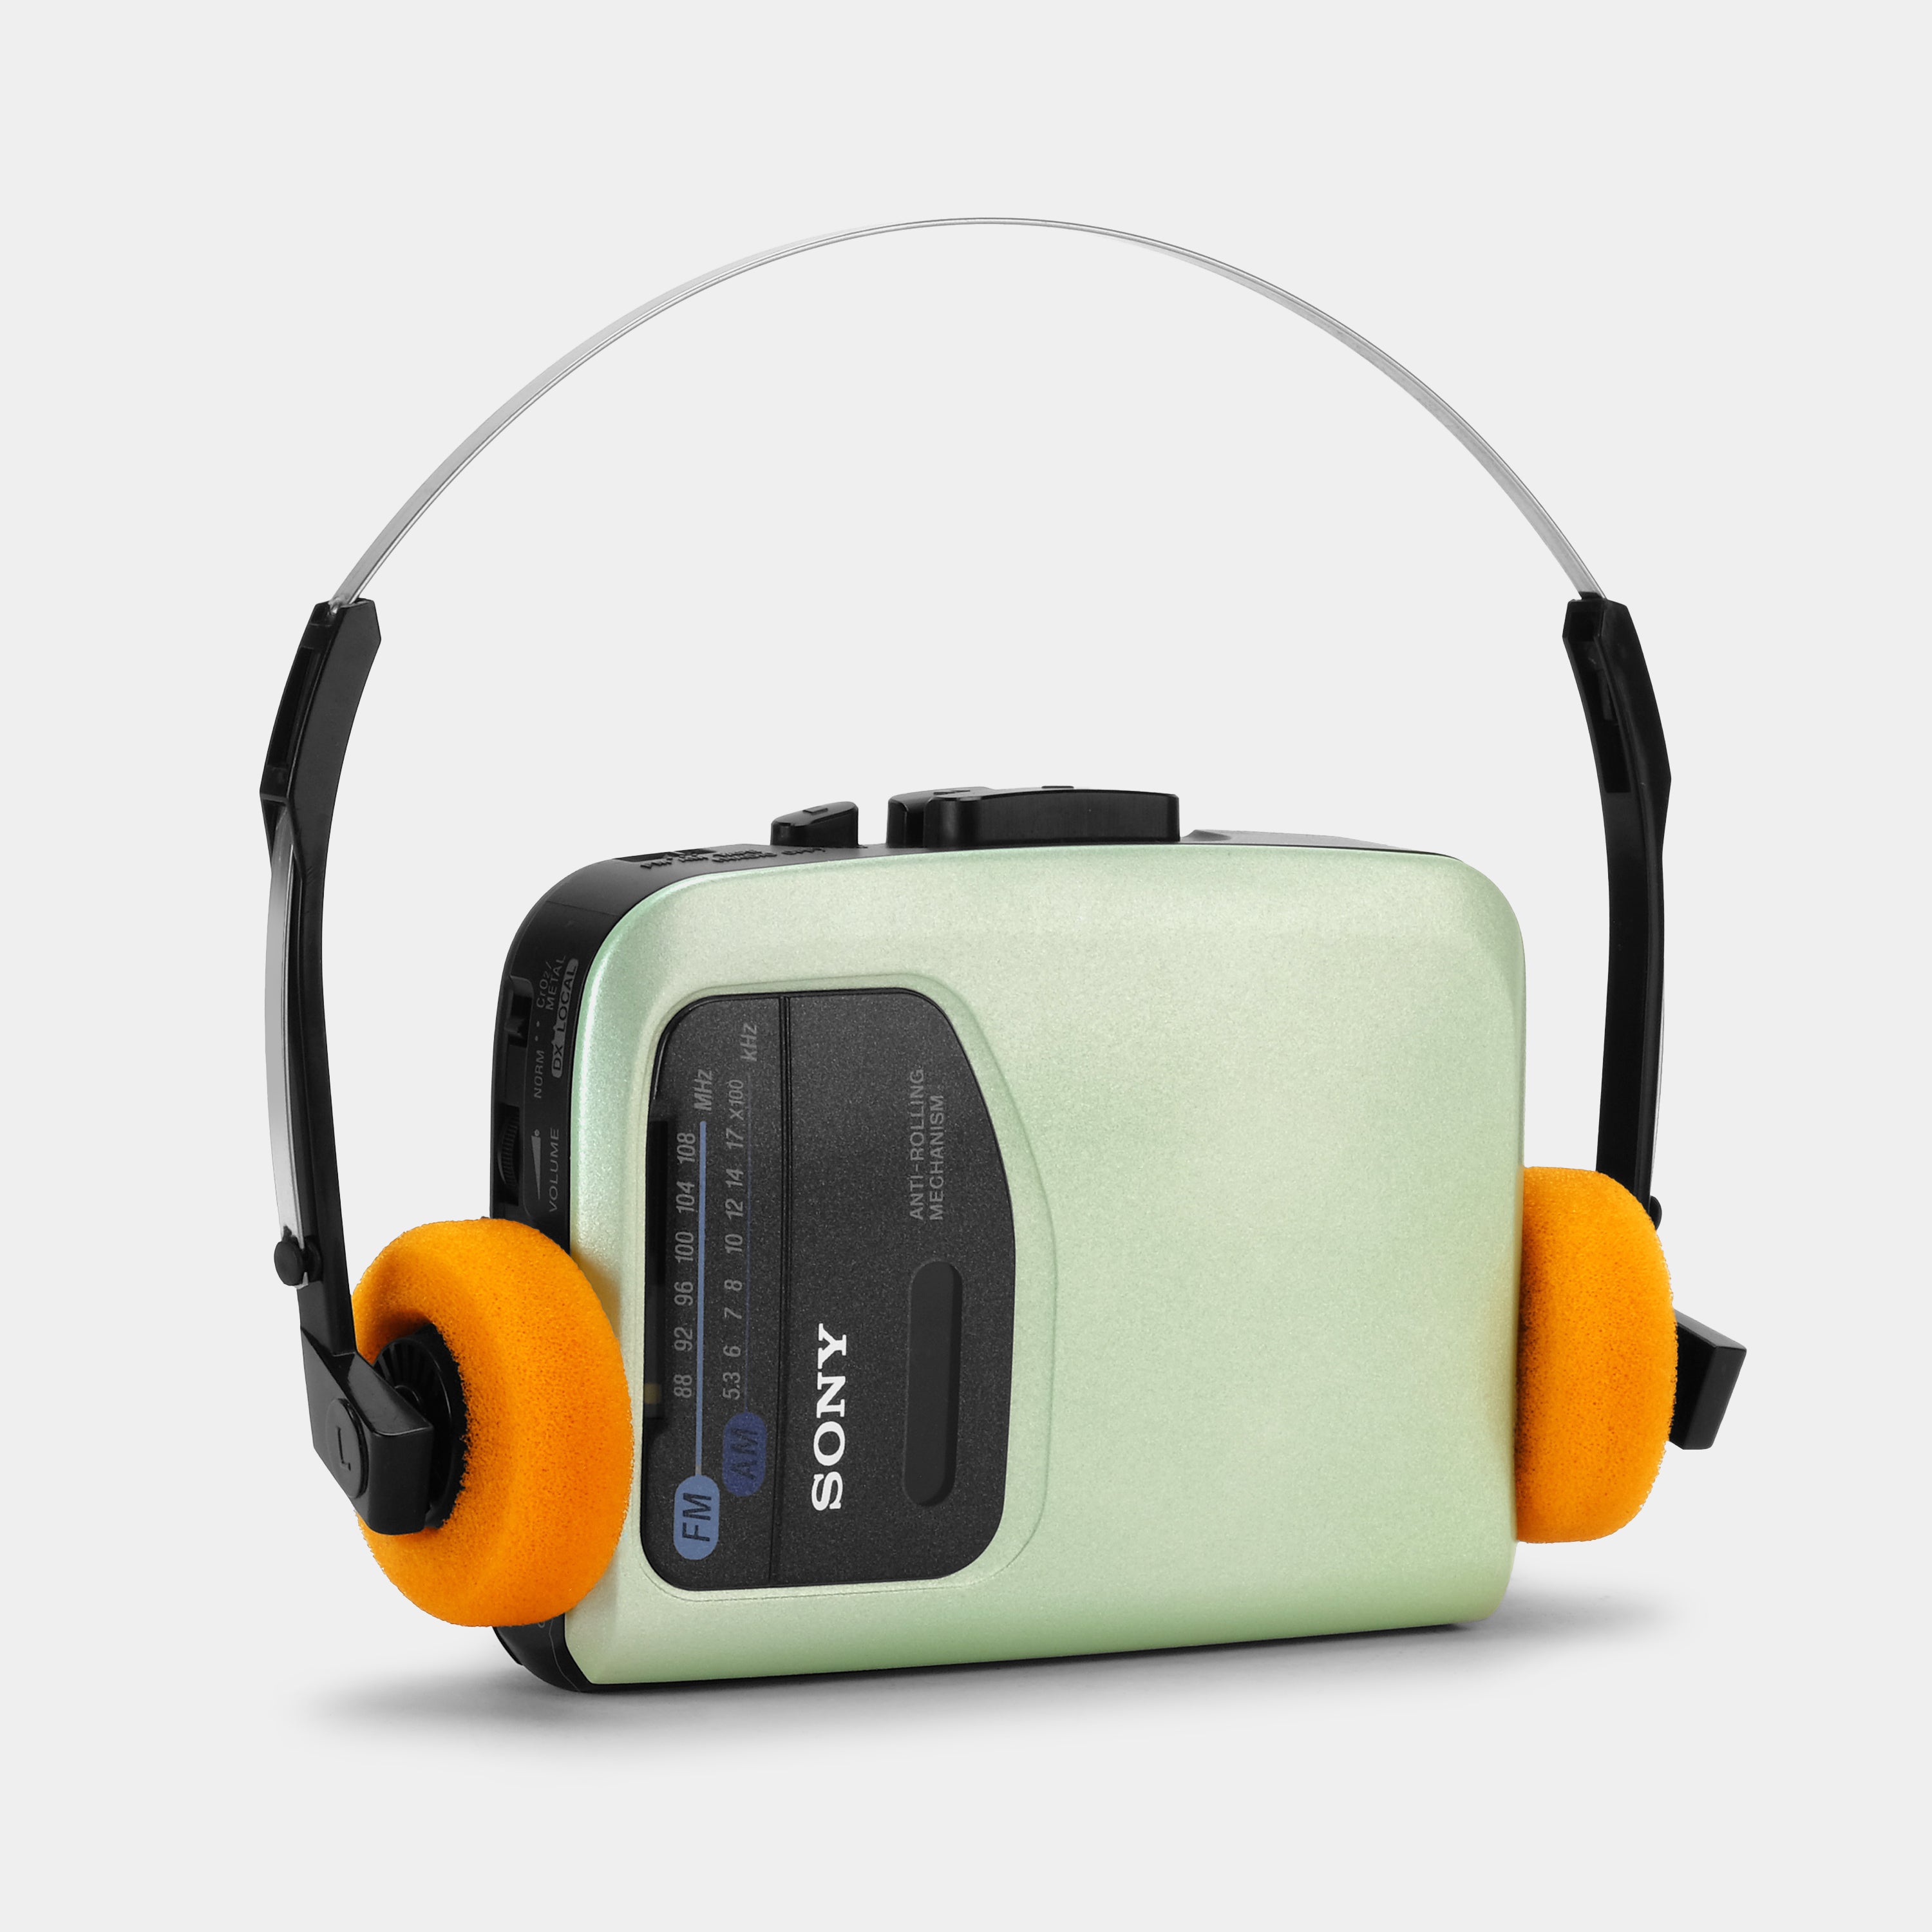 Sony Walkman WM-FX101 AM/FM Mint Portable Cassette Player